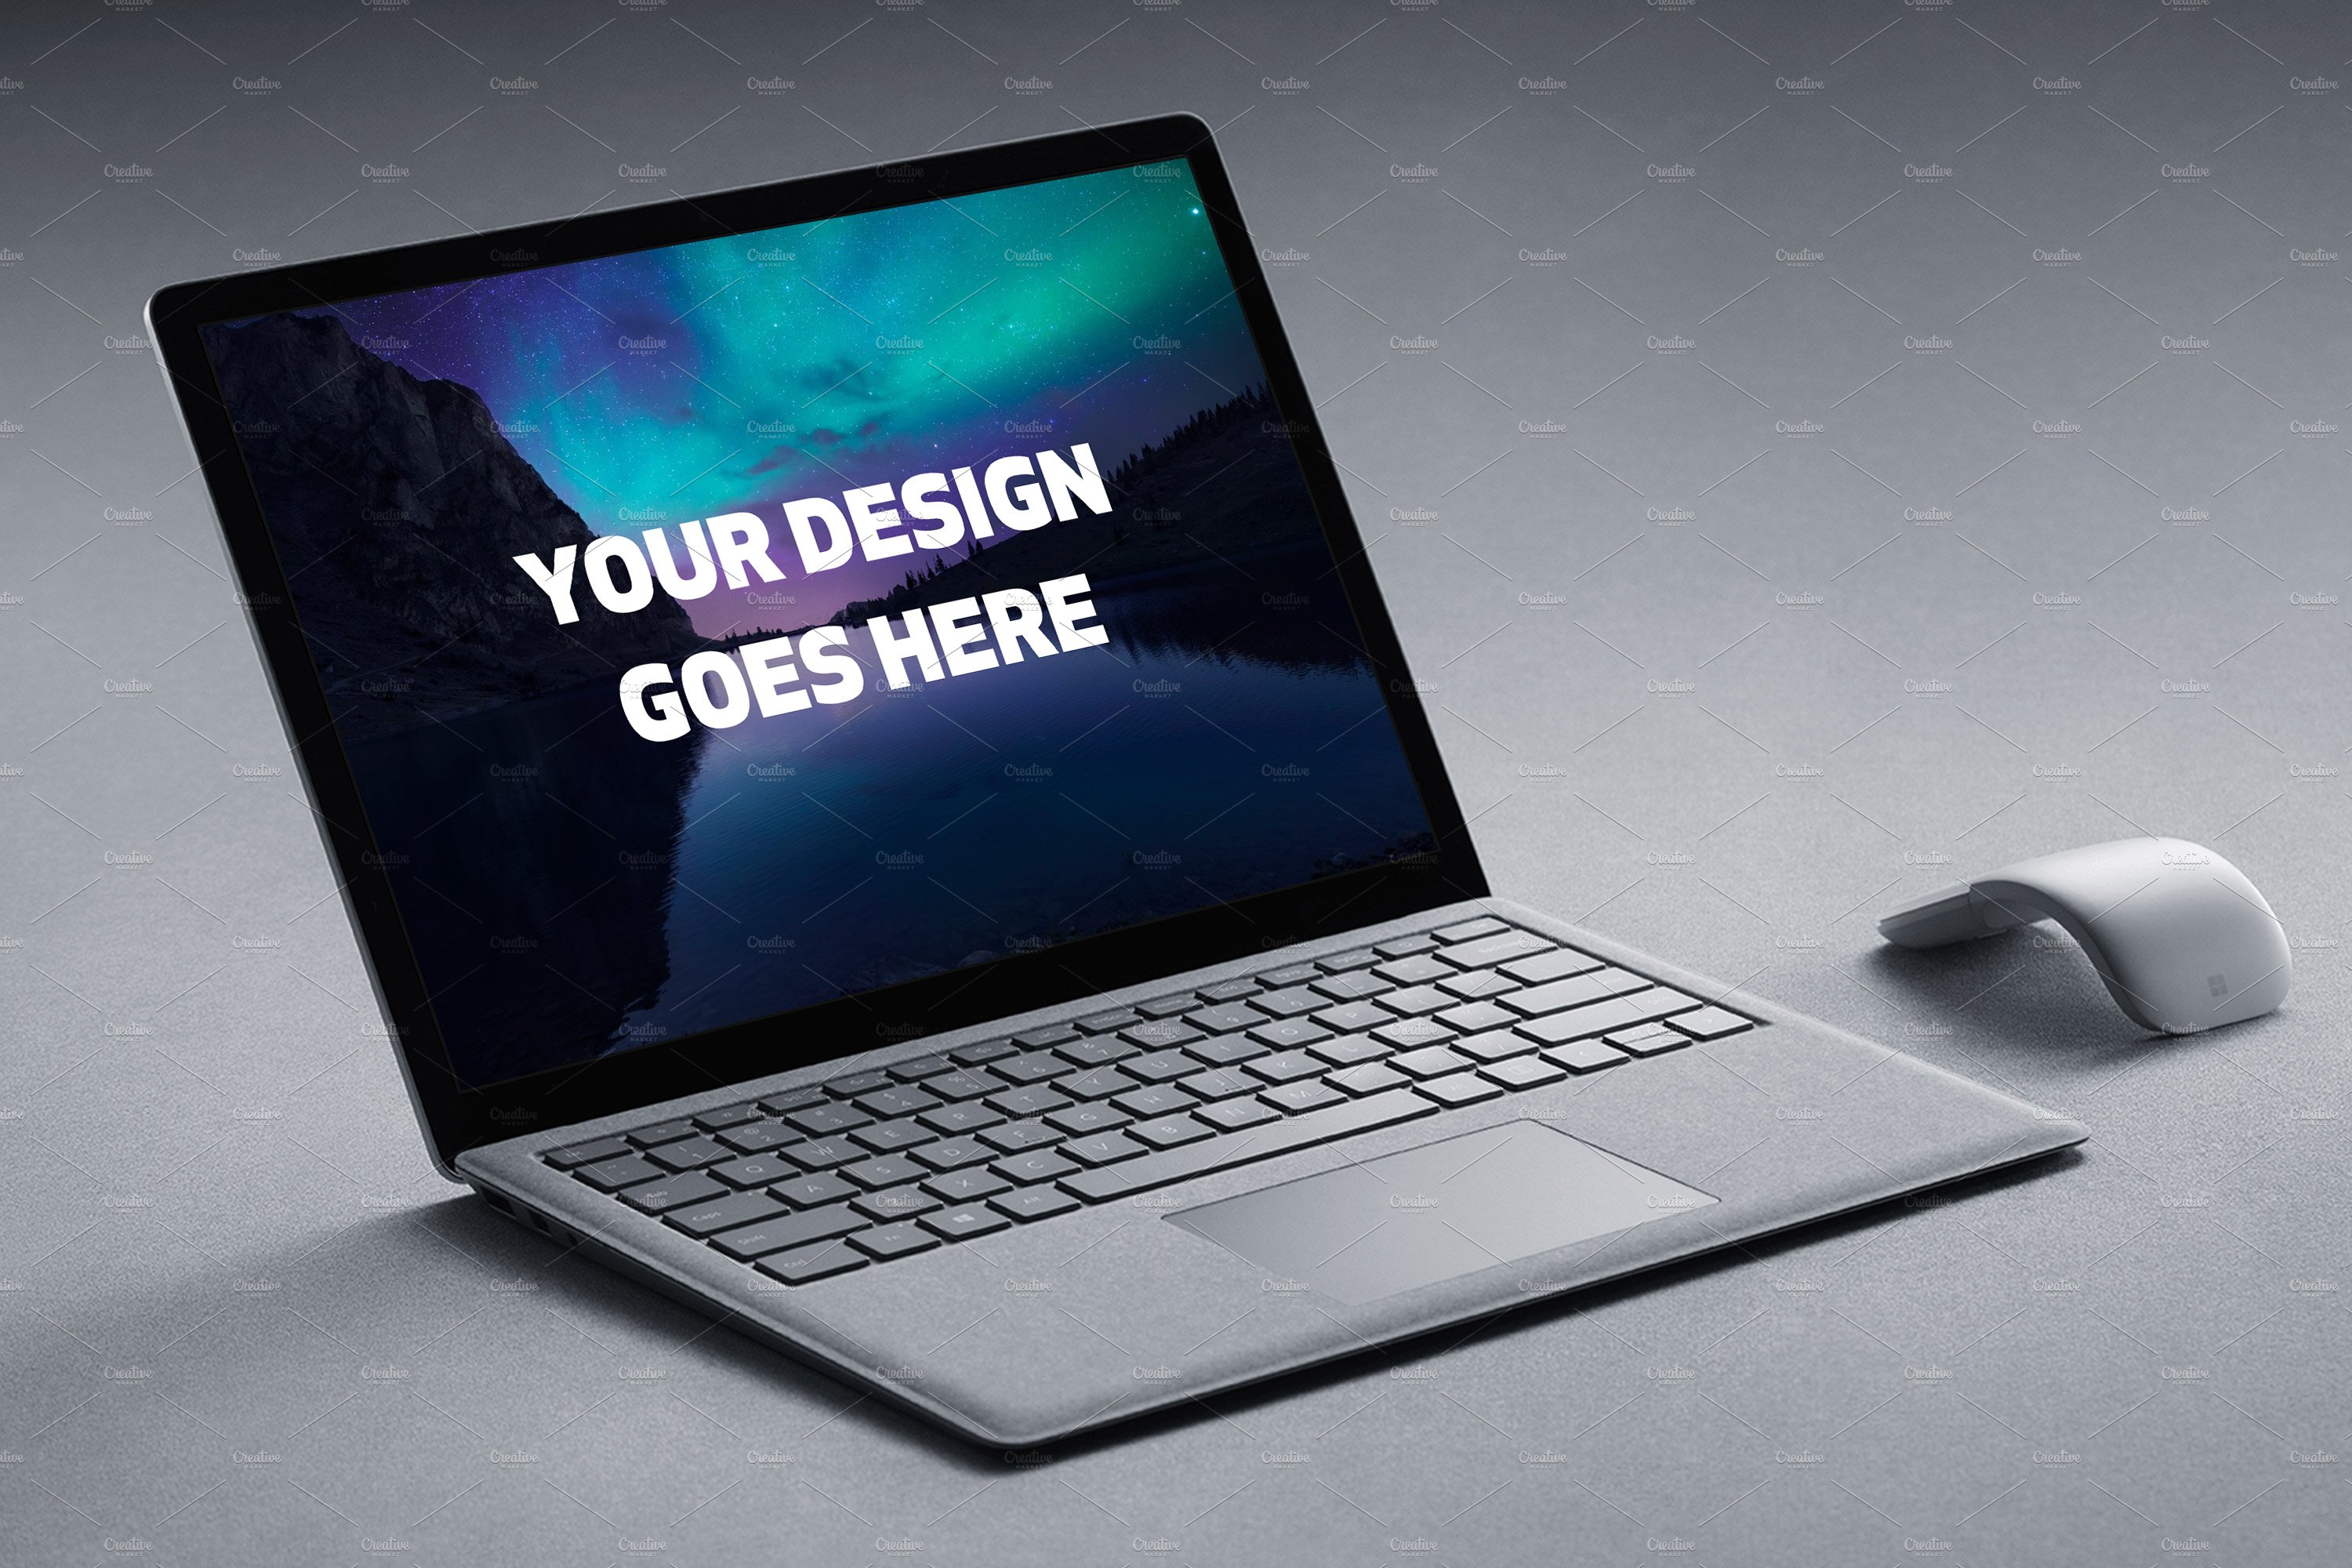 Microsoft Surface Laptop Mock-up#16 cover image.